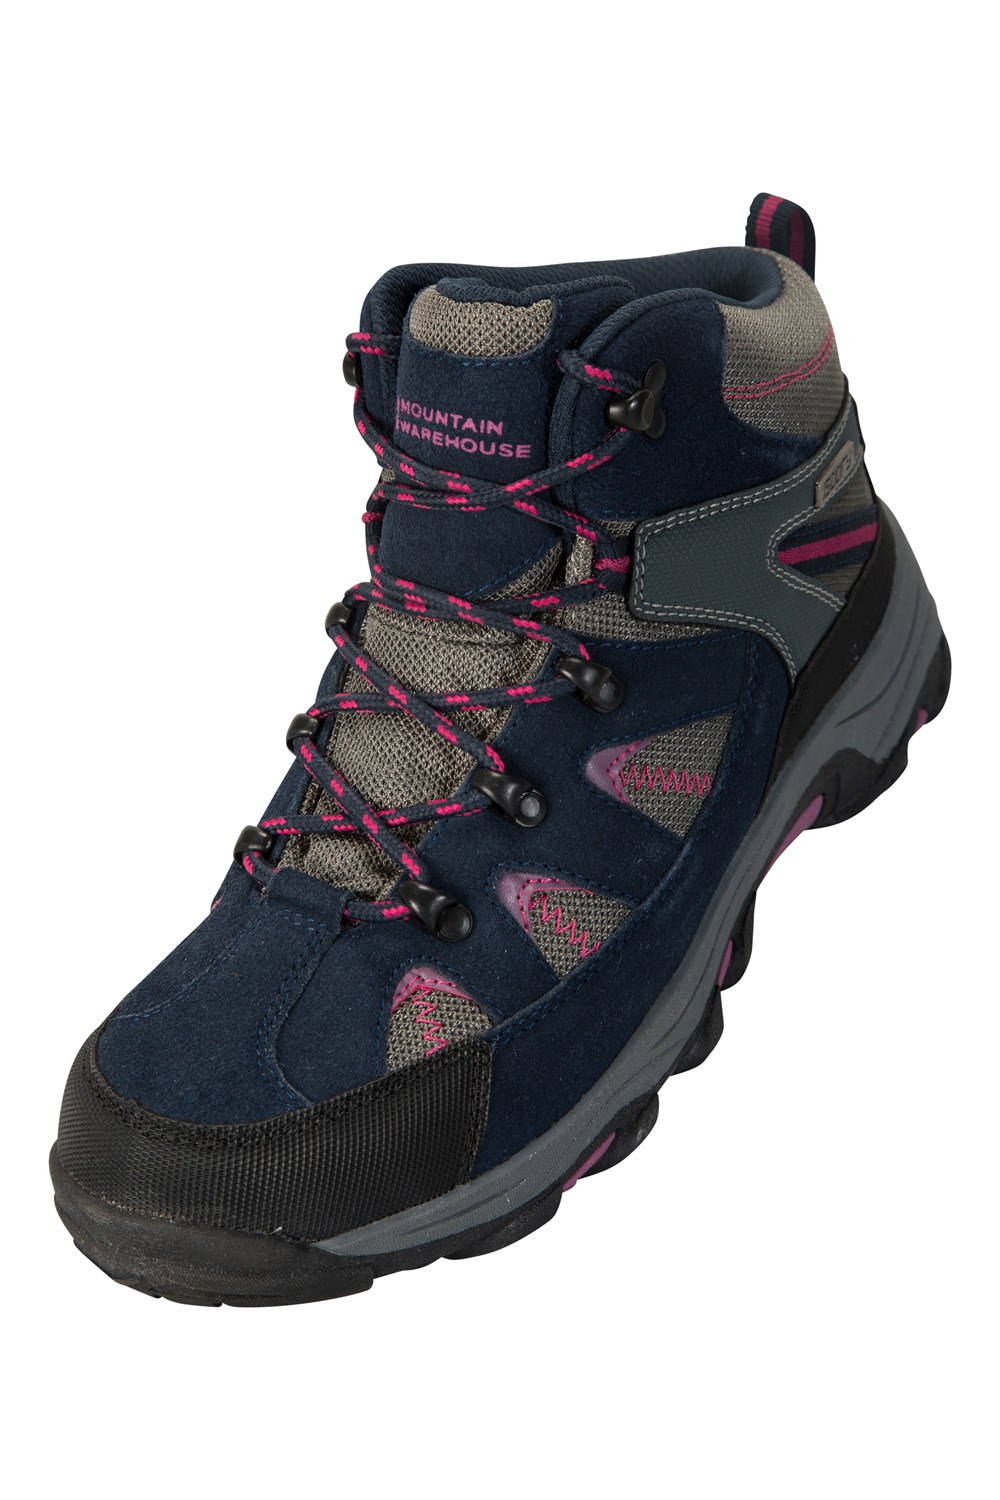 Mountain Warehouse Womens Waterproof Hiking Boots Walking Trekking Boot ...